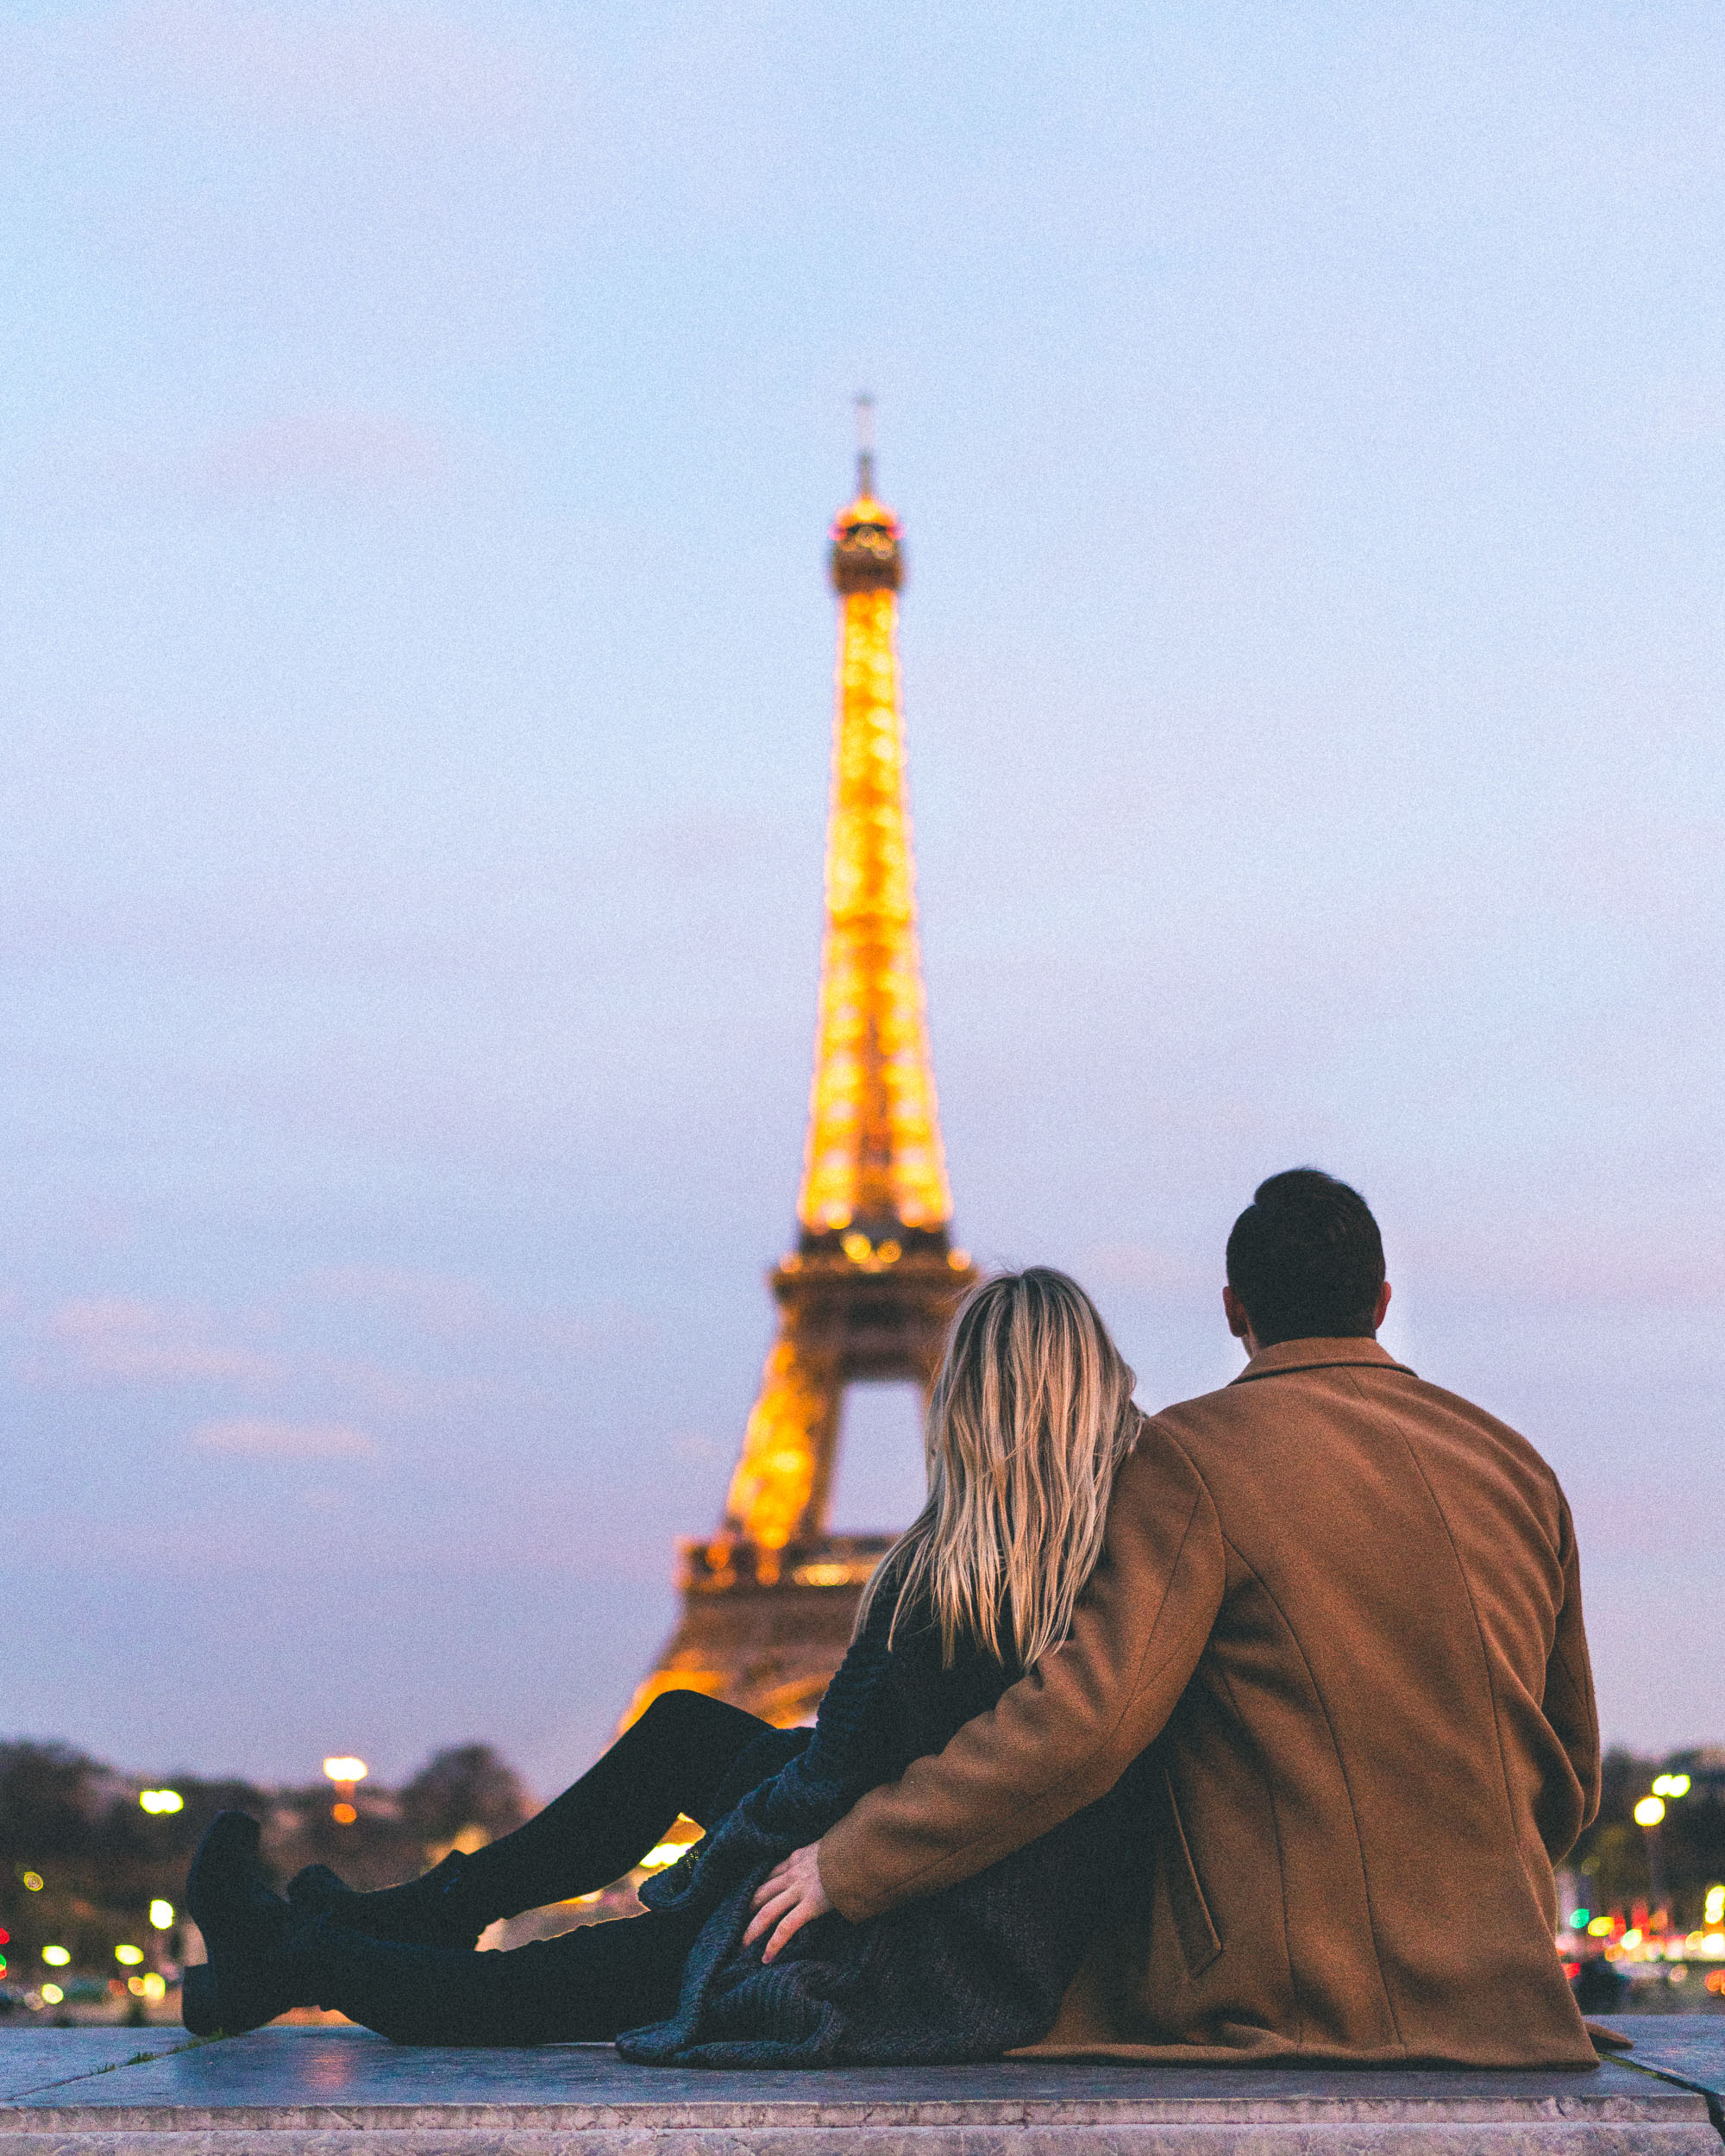 The eiffel tower at sunset - romantic paris activities - Complete Paris Travel Guide